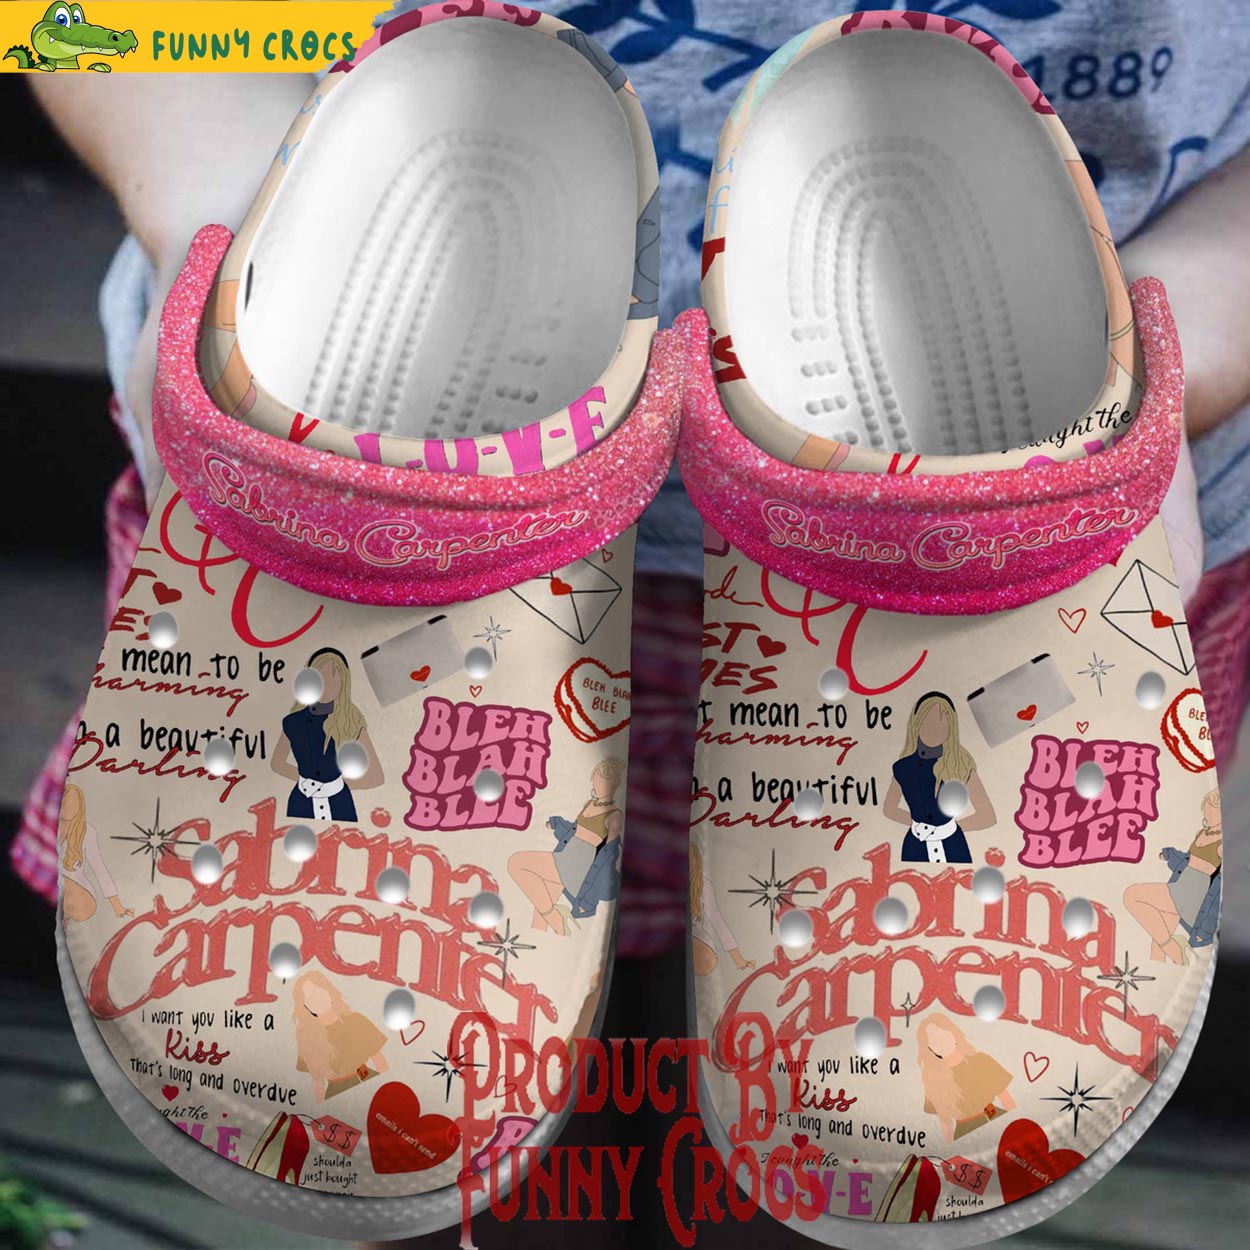 Sabrina Carpenter Crocs Shoes